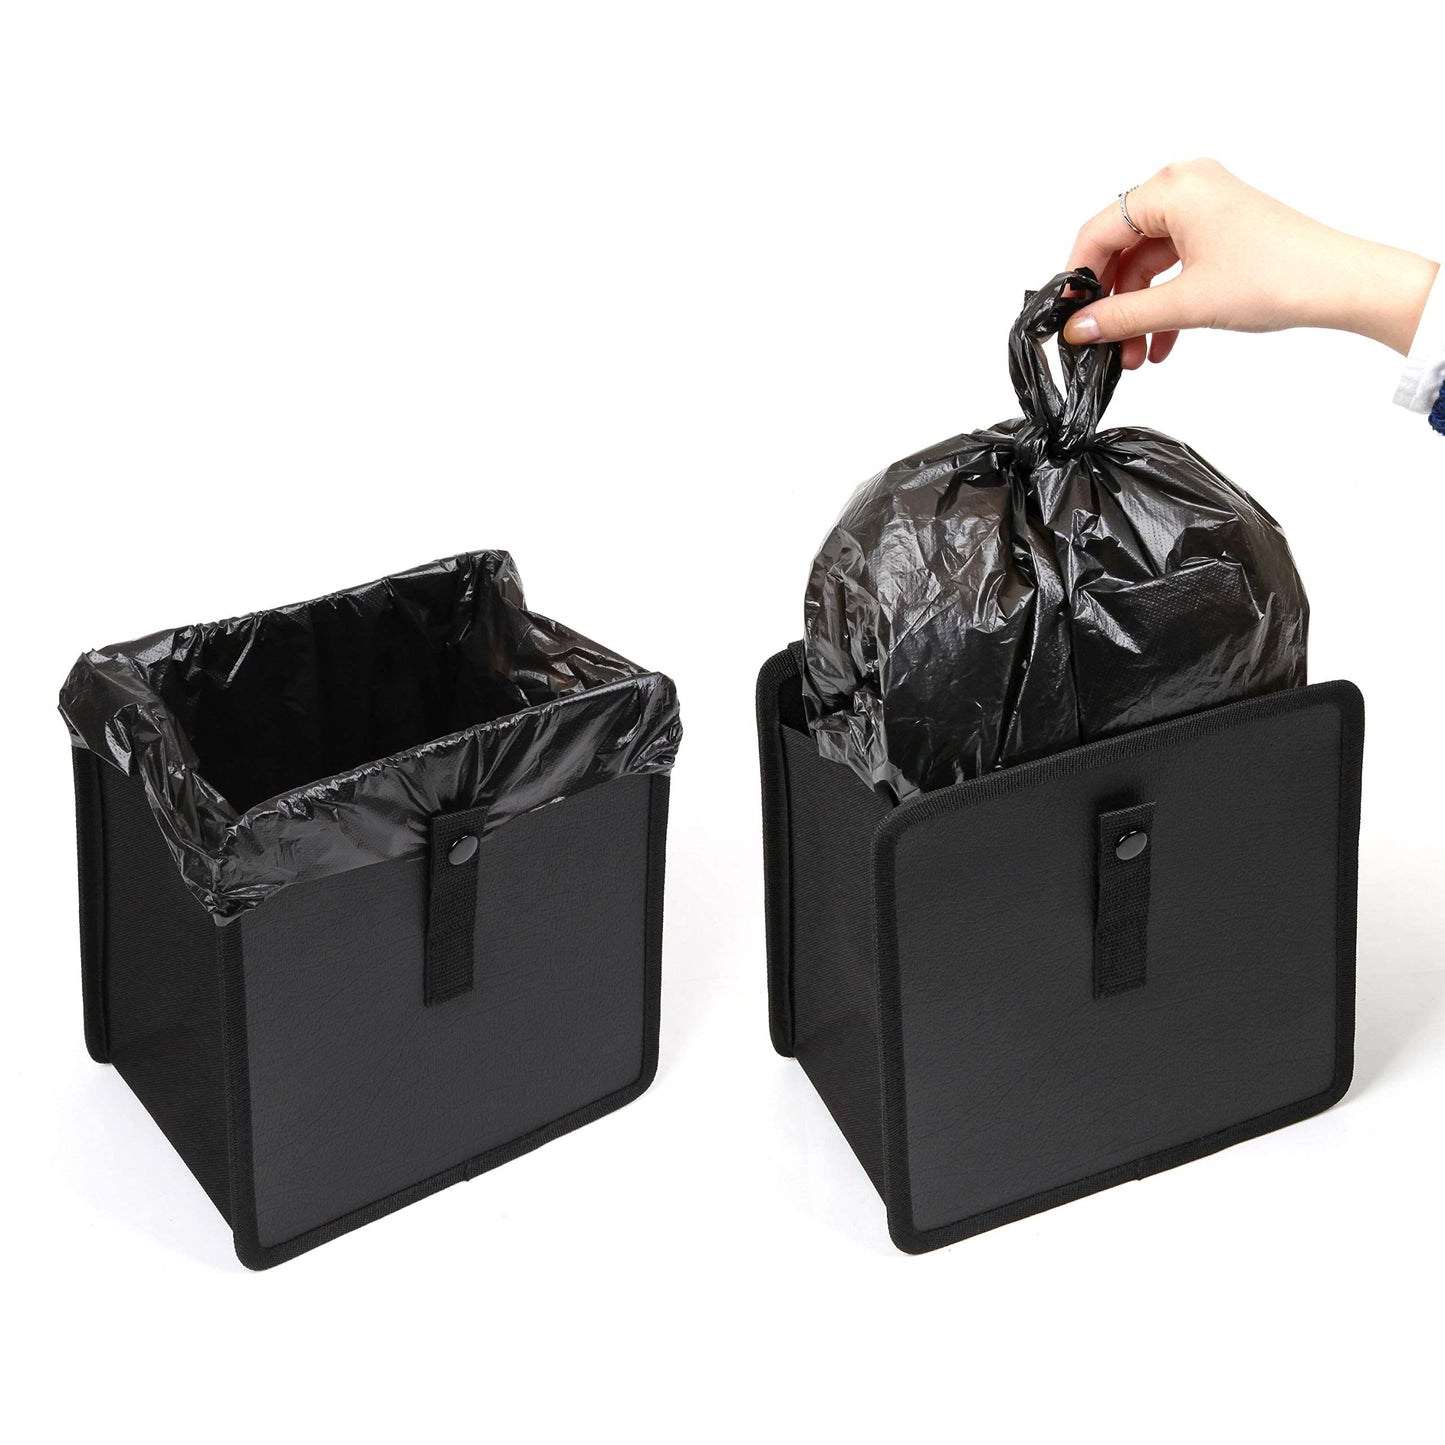 SYOSI Foldable Hanging Car Trash Can, Car Waste Basket, Car Garbage bin, Vegan Leather and Oxford Clothes Car Organizer, car Gadgets (Medium, Black)